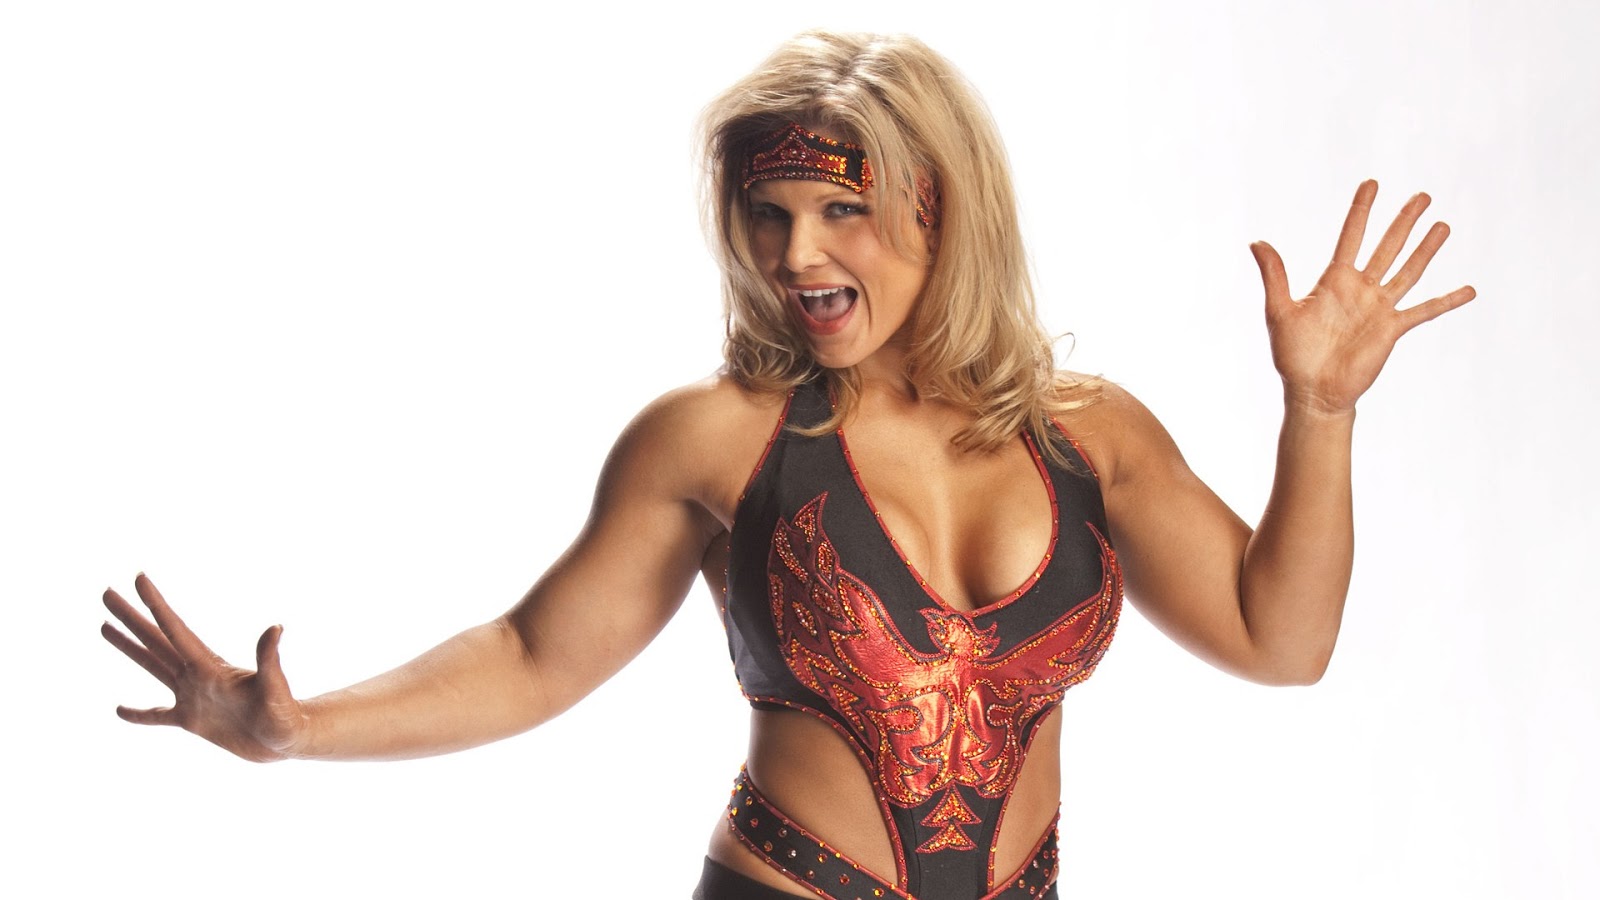 Beth Phoenix Wwe Wrestler Player Latest Sexy Hd Wallpaper